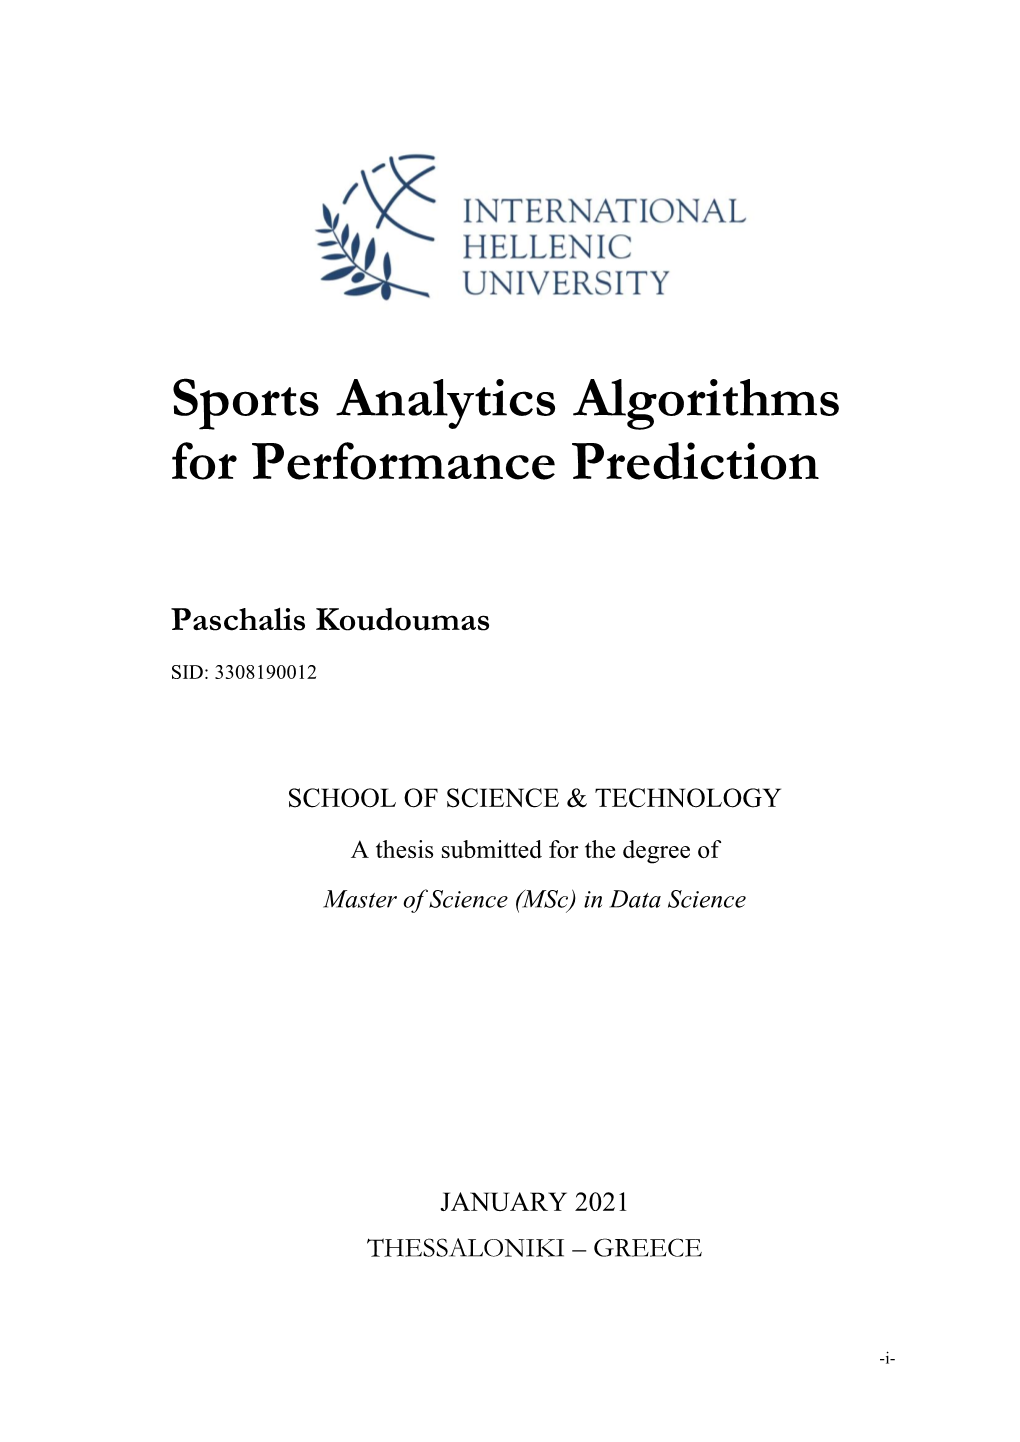 Sports Analytics Algorithms for Performance Prediction